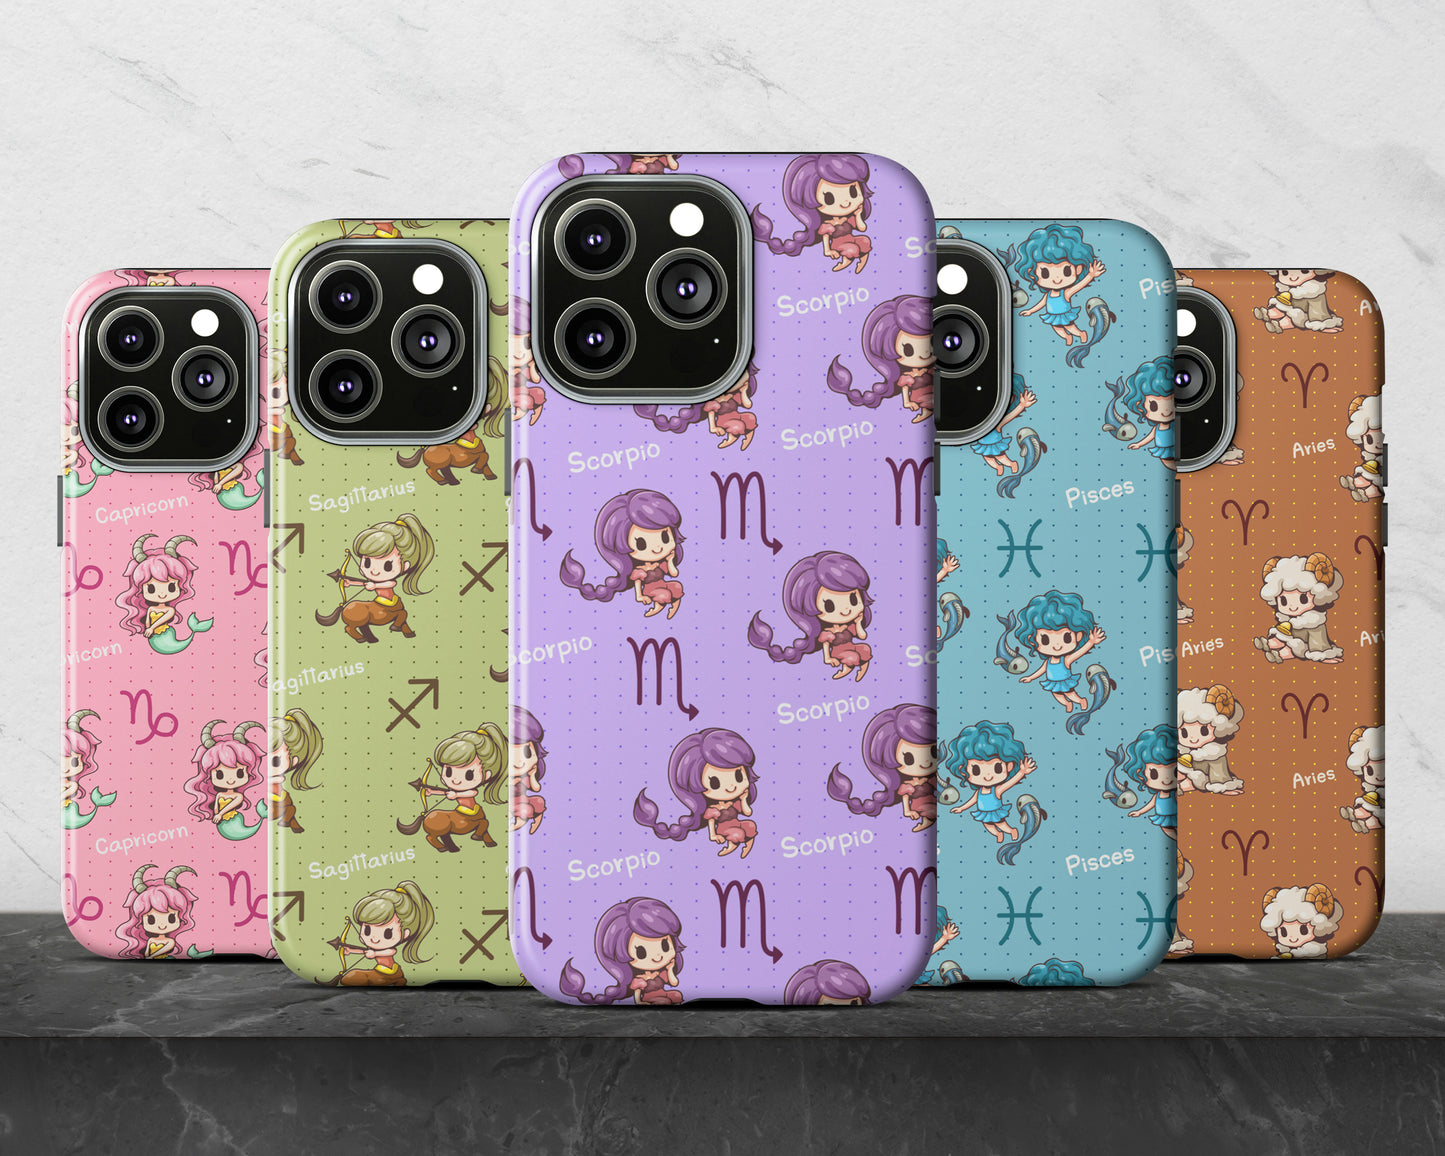 Aquarius Zodiac sign cute cartoon girl iPhone case